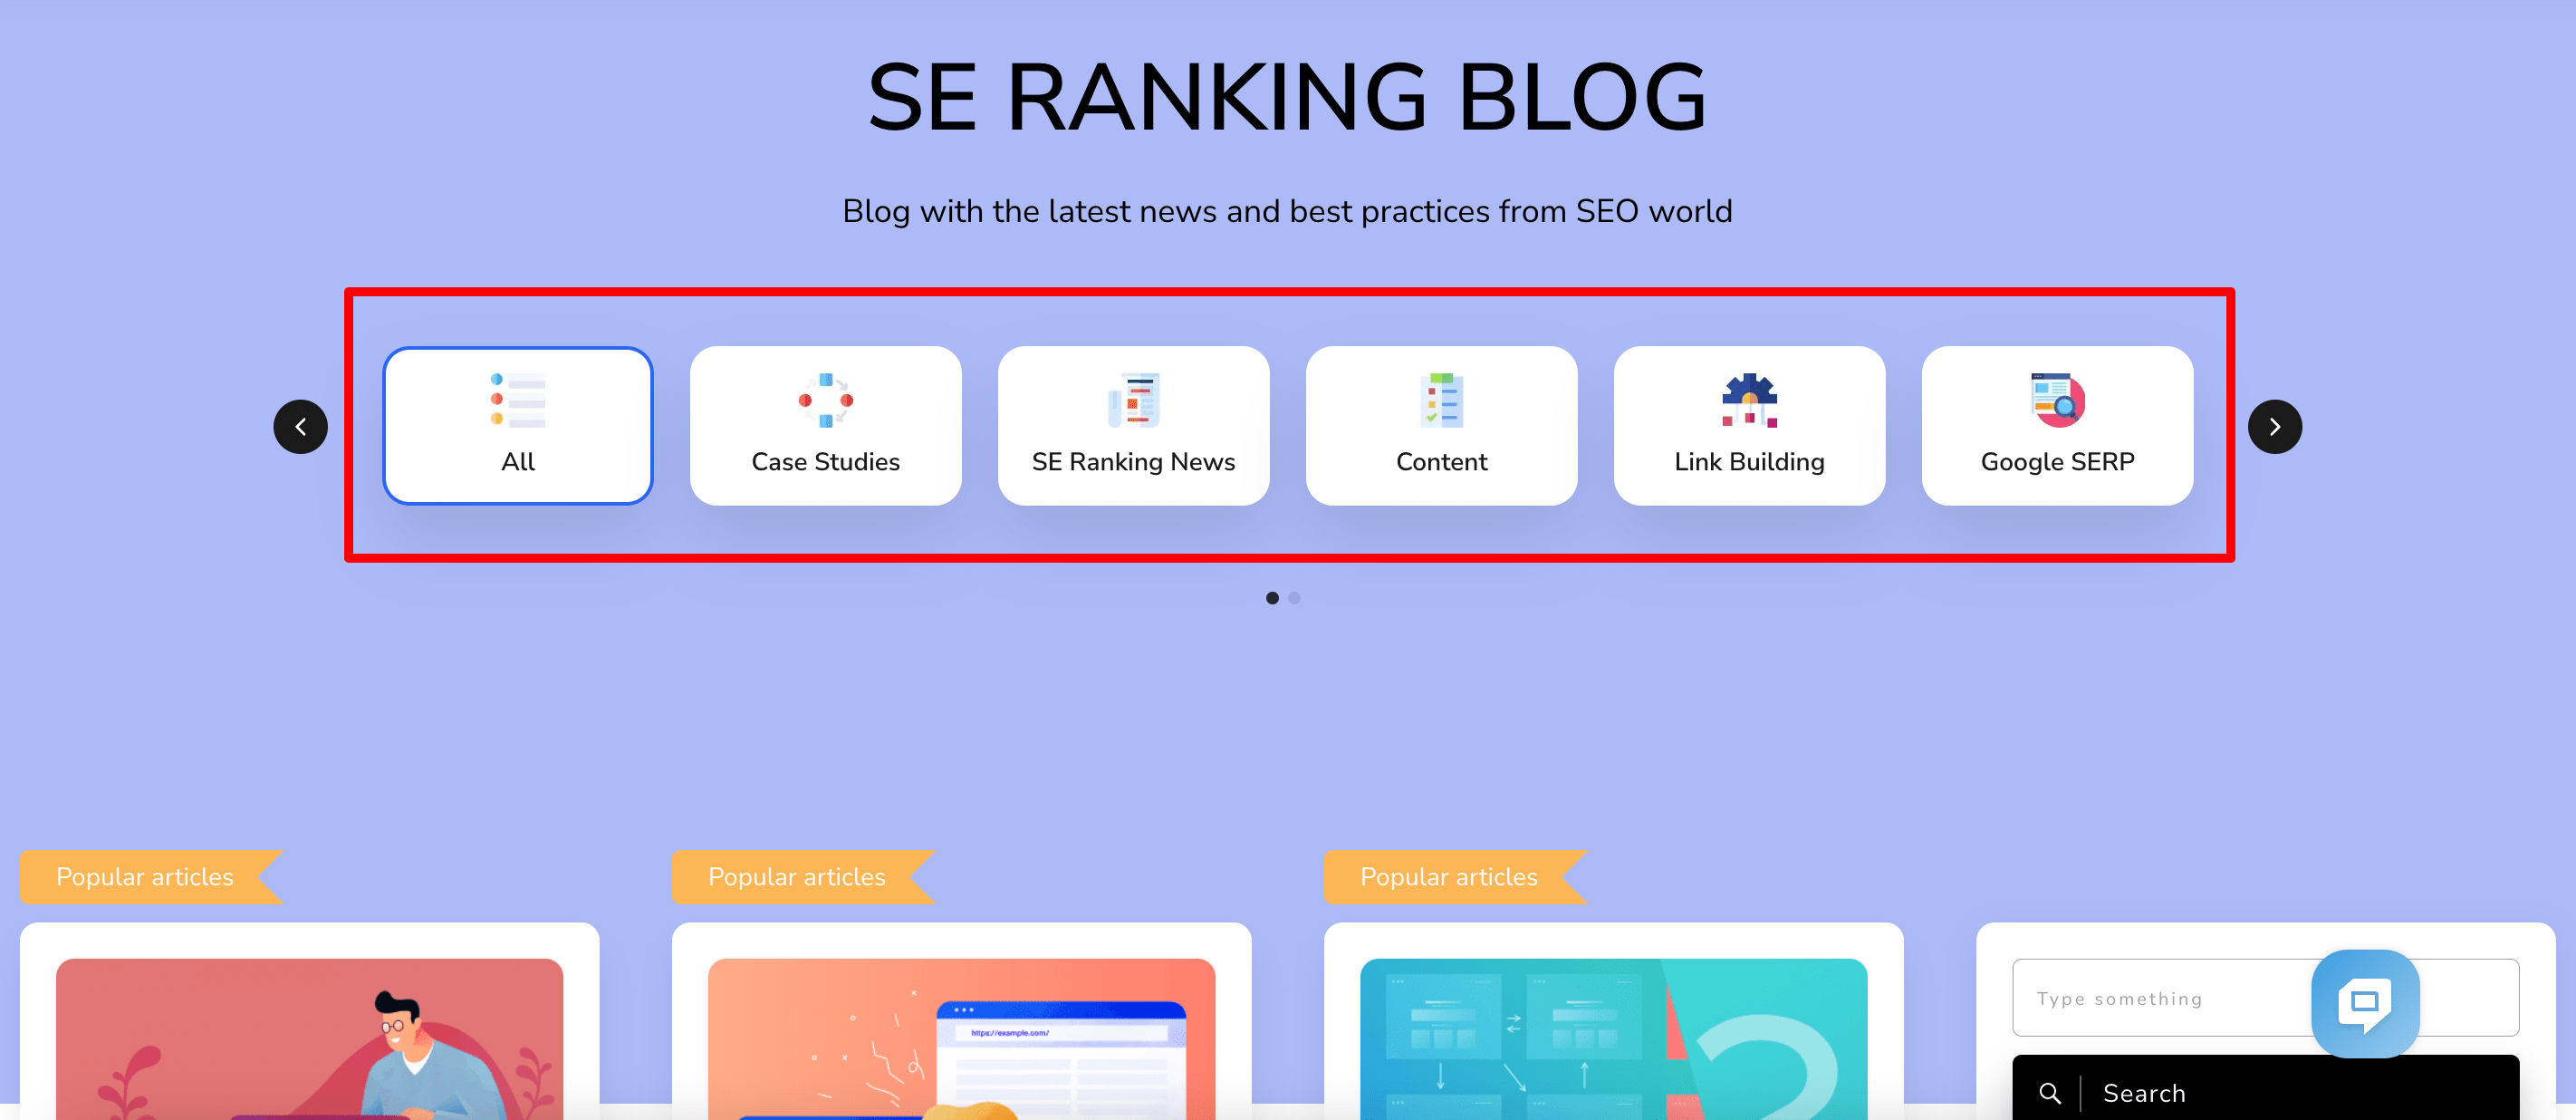 Categories in SE Ranking blog